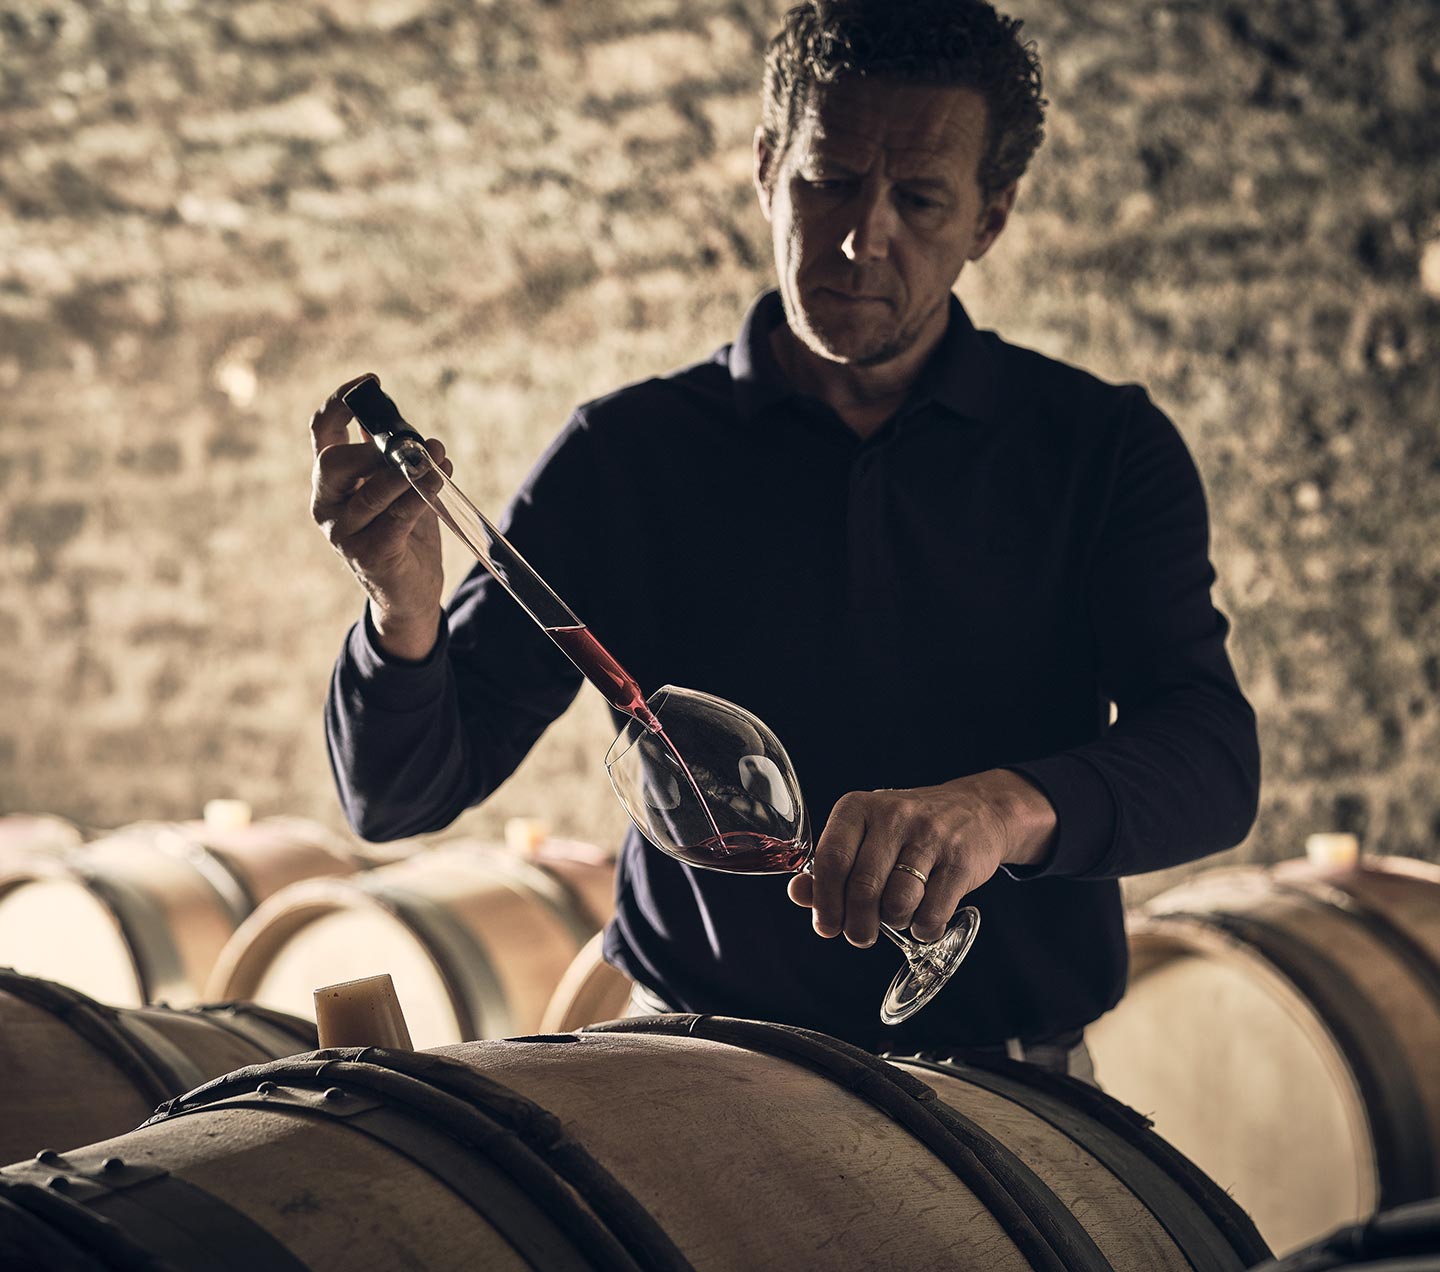 david-duband-expert-vinification-mia-wines